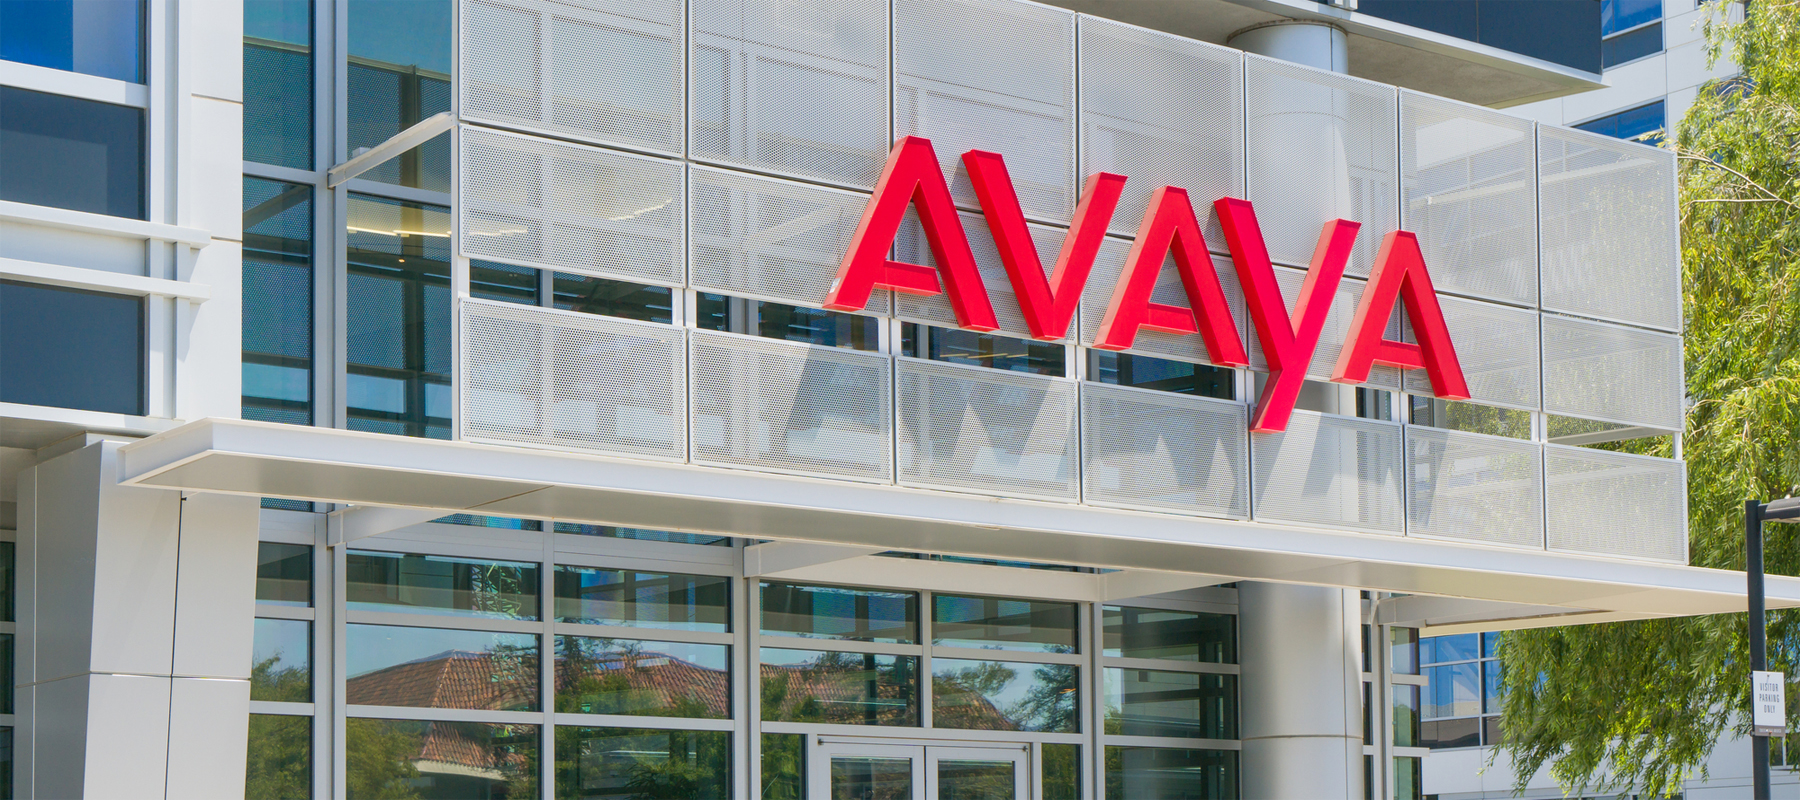 Avaya Phone System Logo on Corporate Headquarters Building